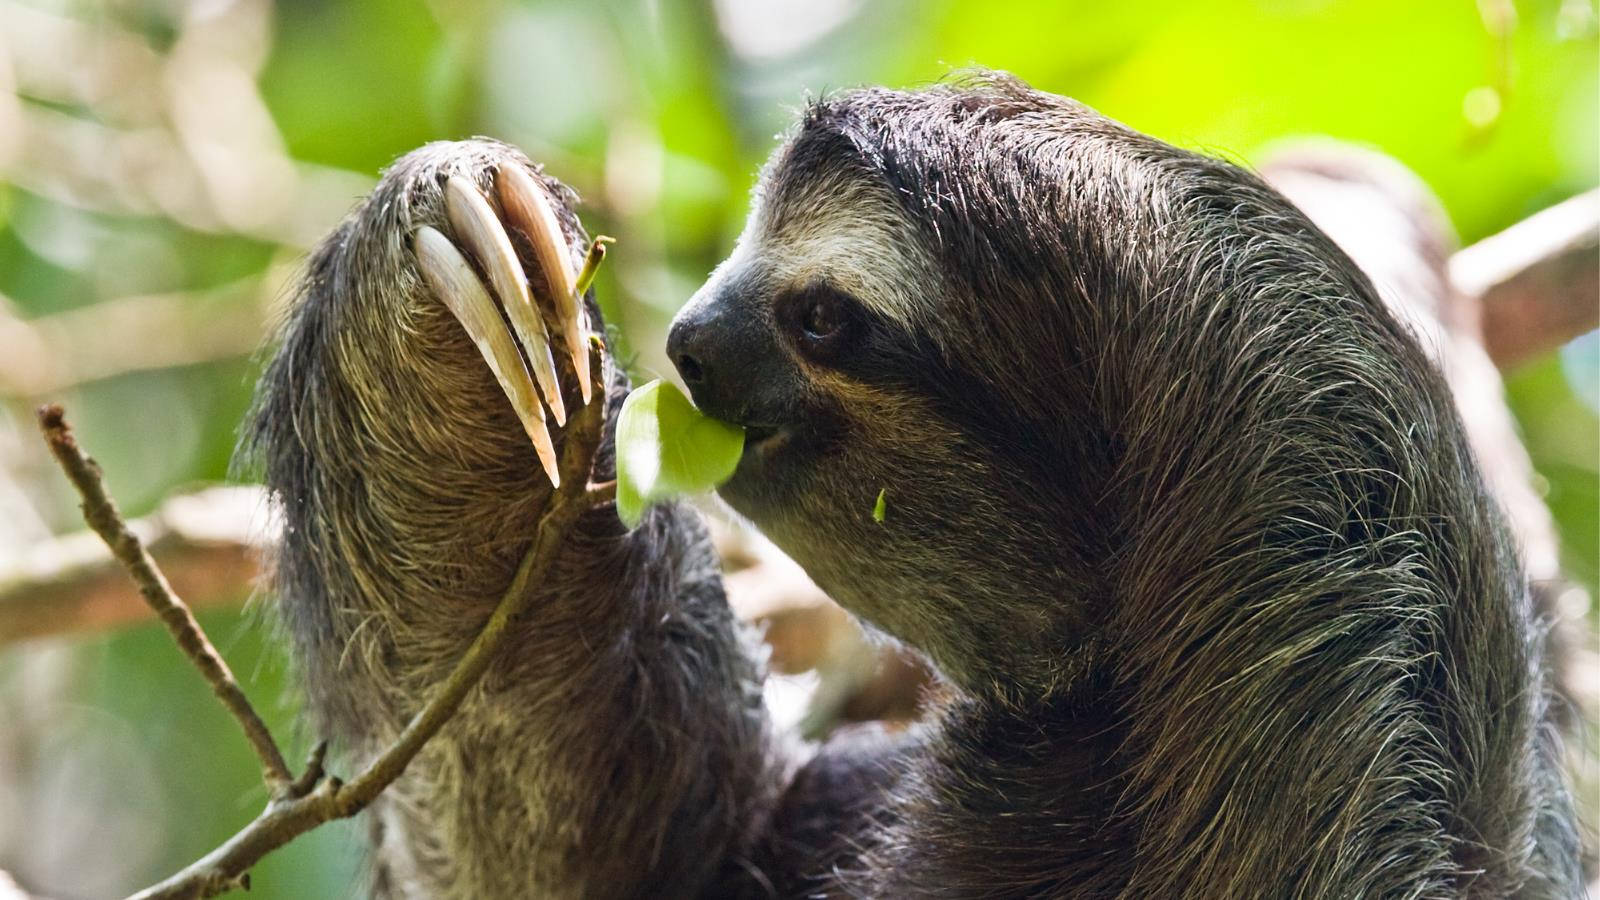 Sloth Eating A Leaf